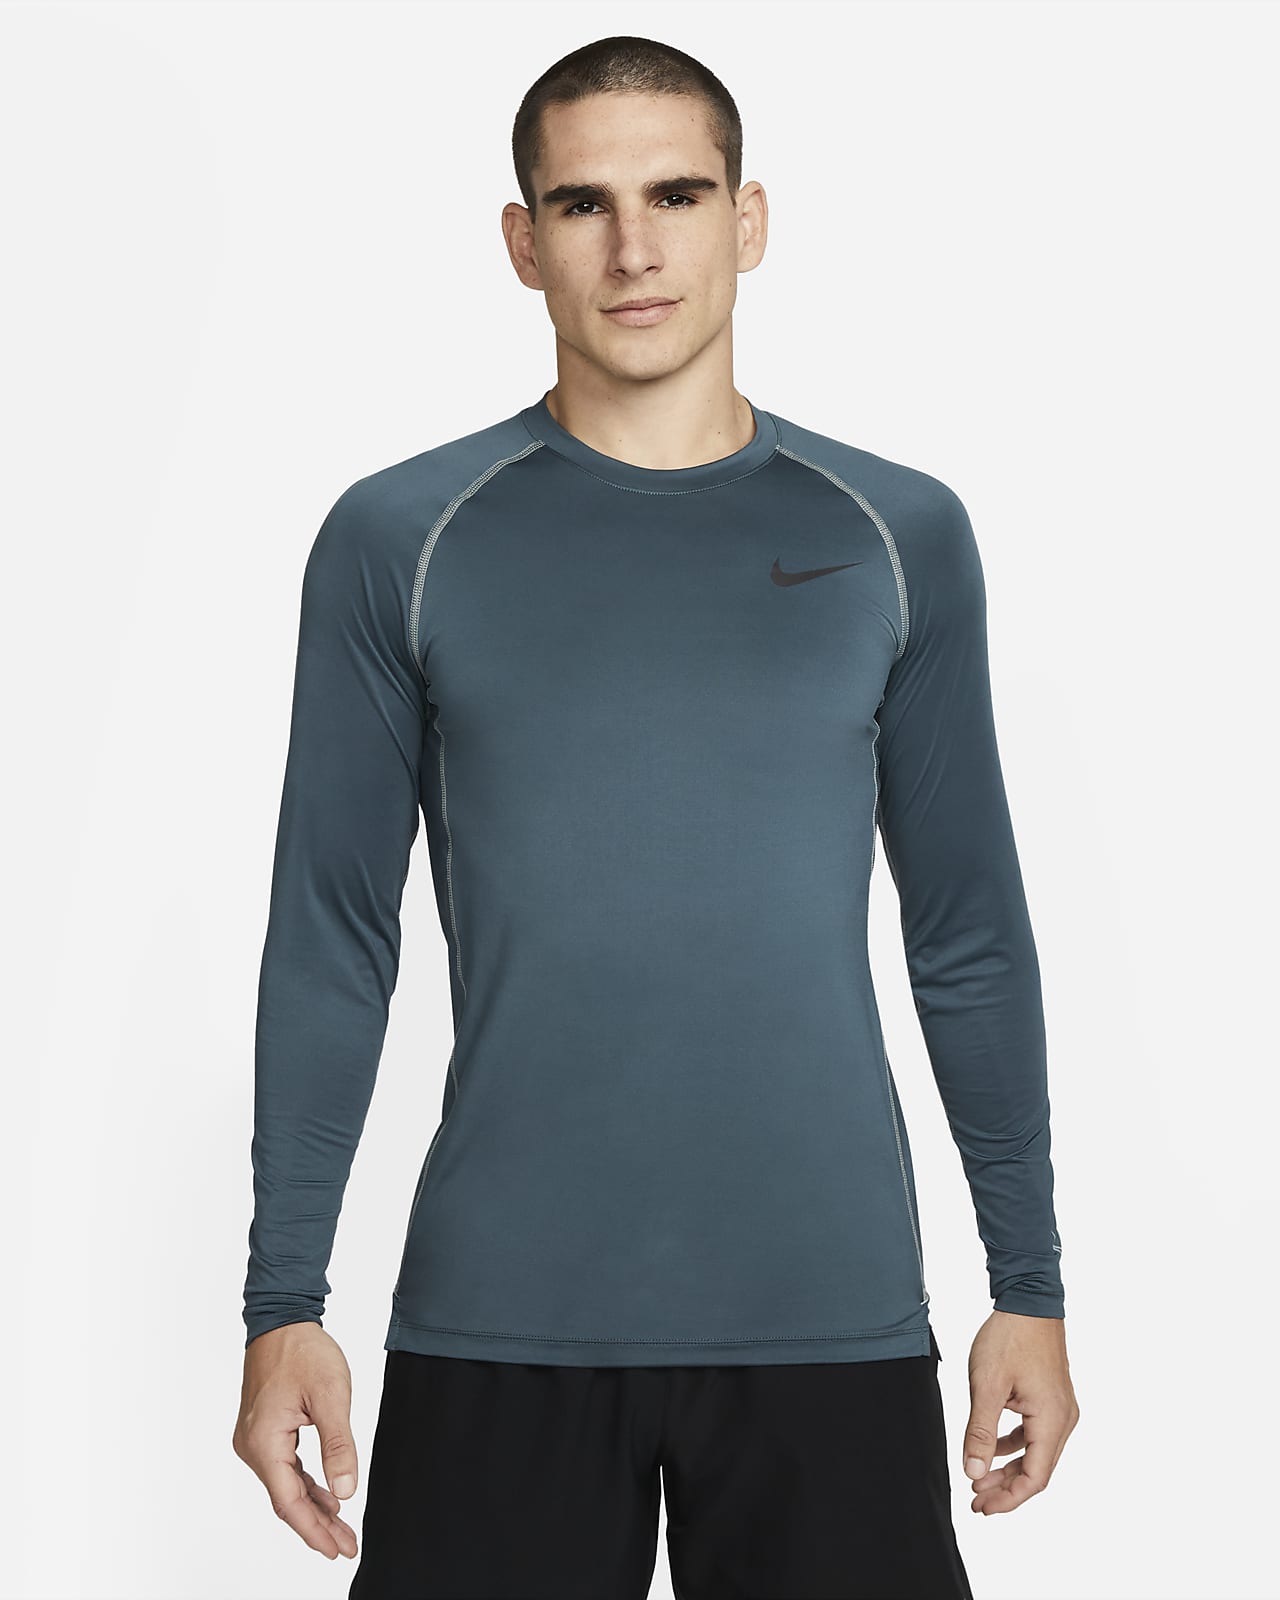 Camiseta larga ajuste entallado para hombre Nike Pro Dri-FIT.